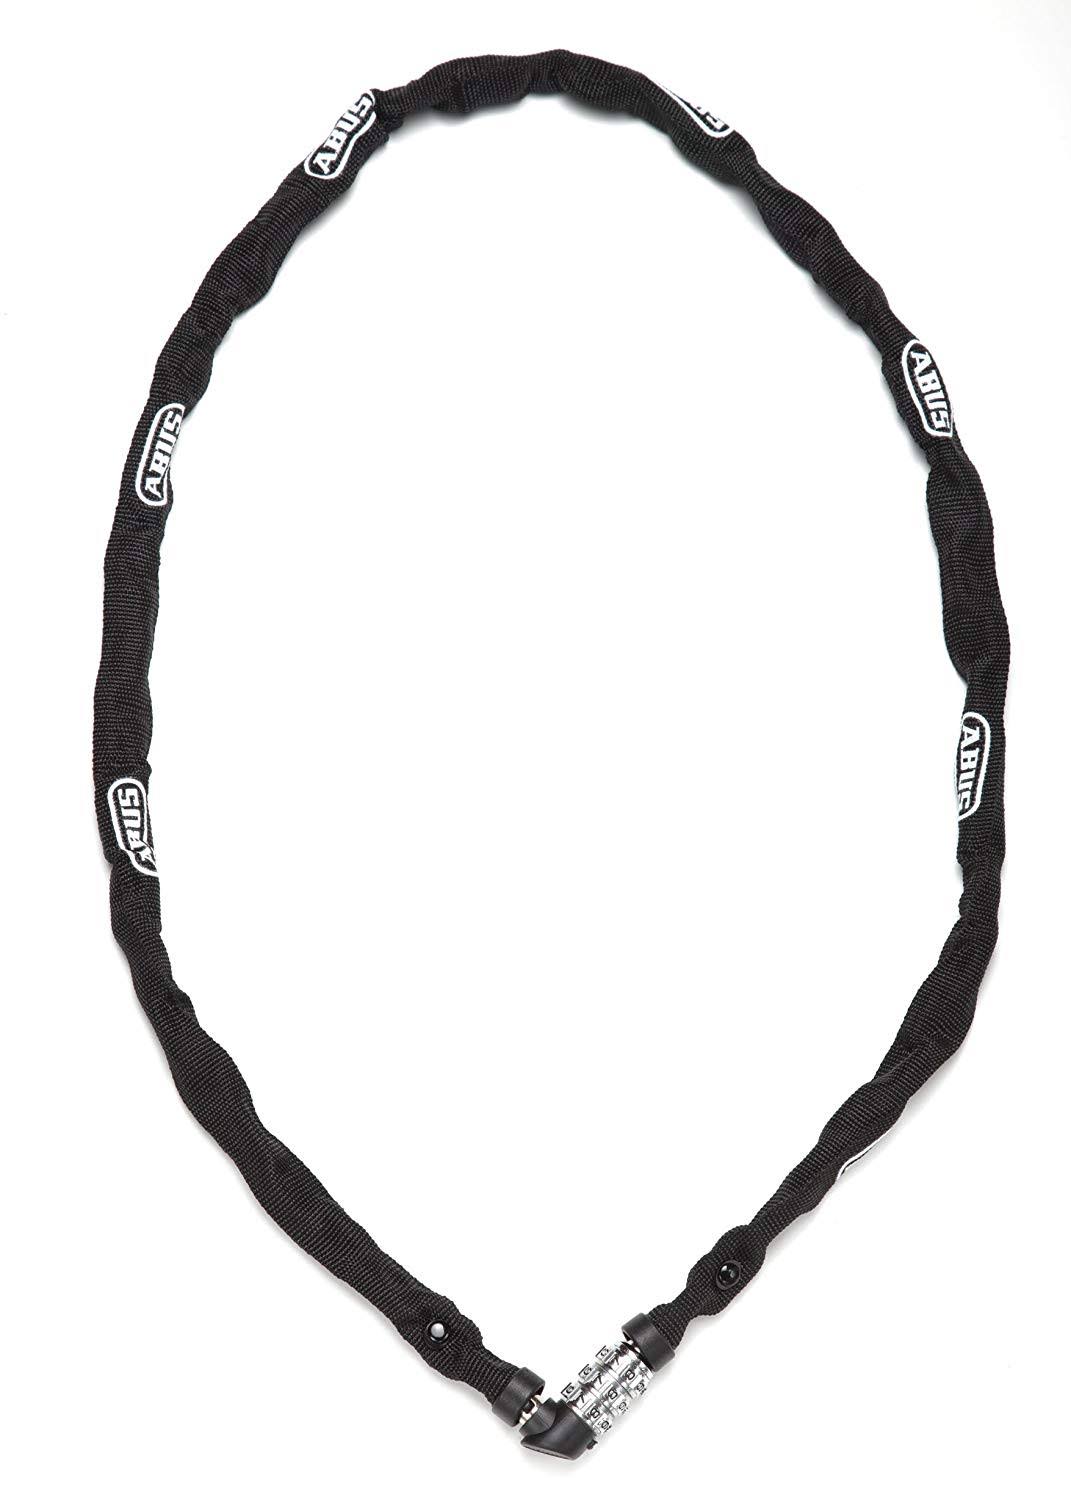 Abus Chain Combo Web Lock - Black, 110cm